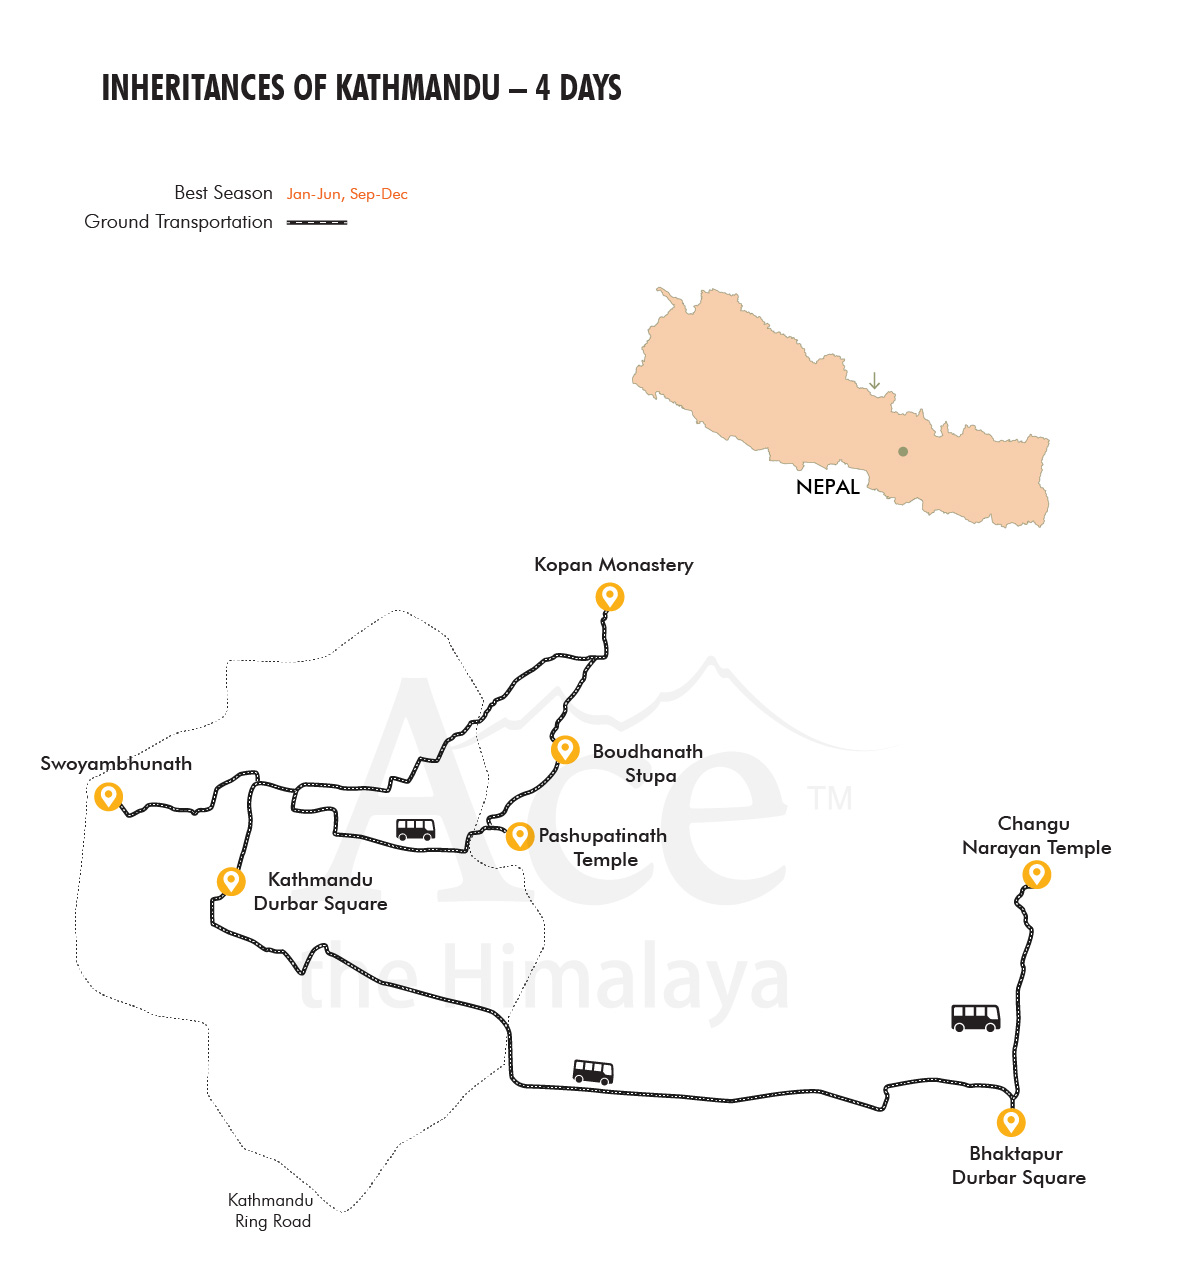 Inheritances of Kathmandu